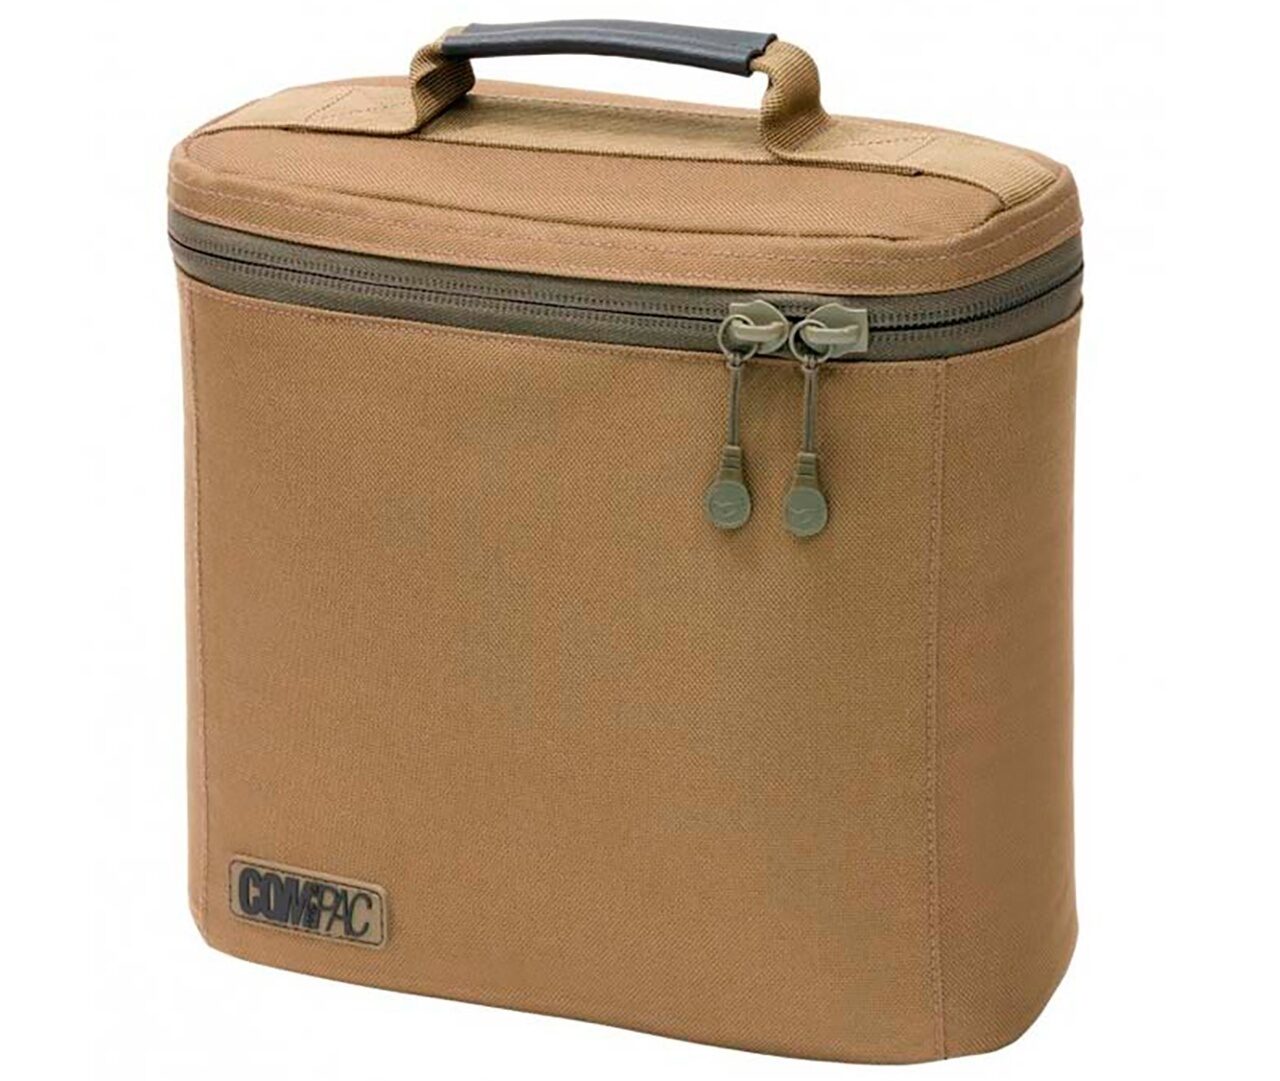 Термо-сумка карповая Малая Korda (Корда) - Compac Cool Bag Small